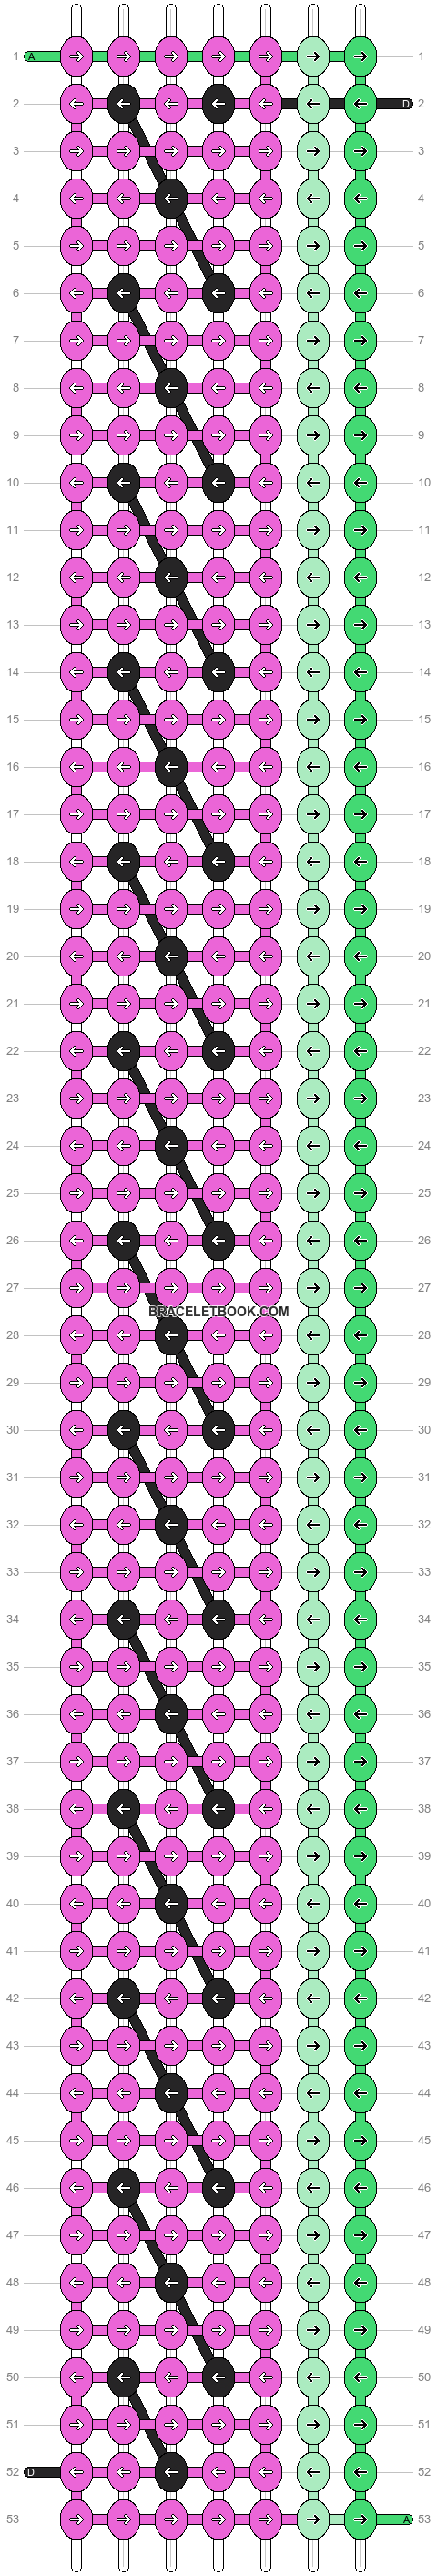 Alpha pattern #99451 pattern